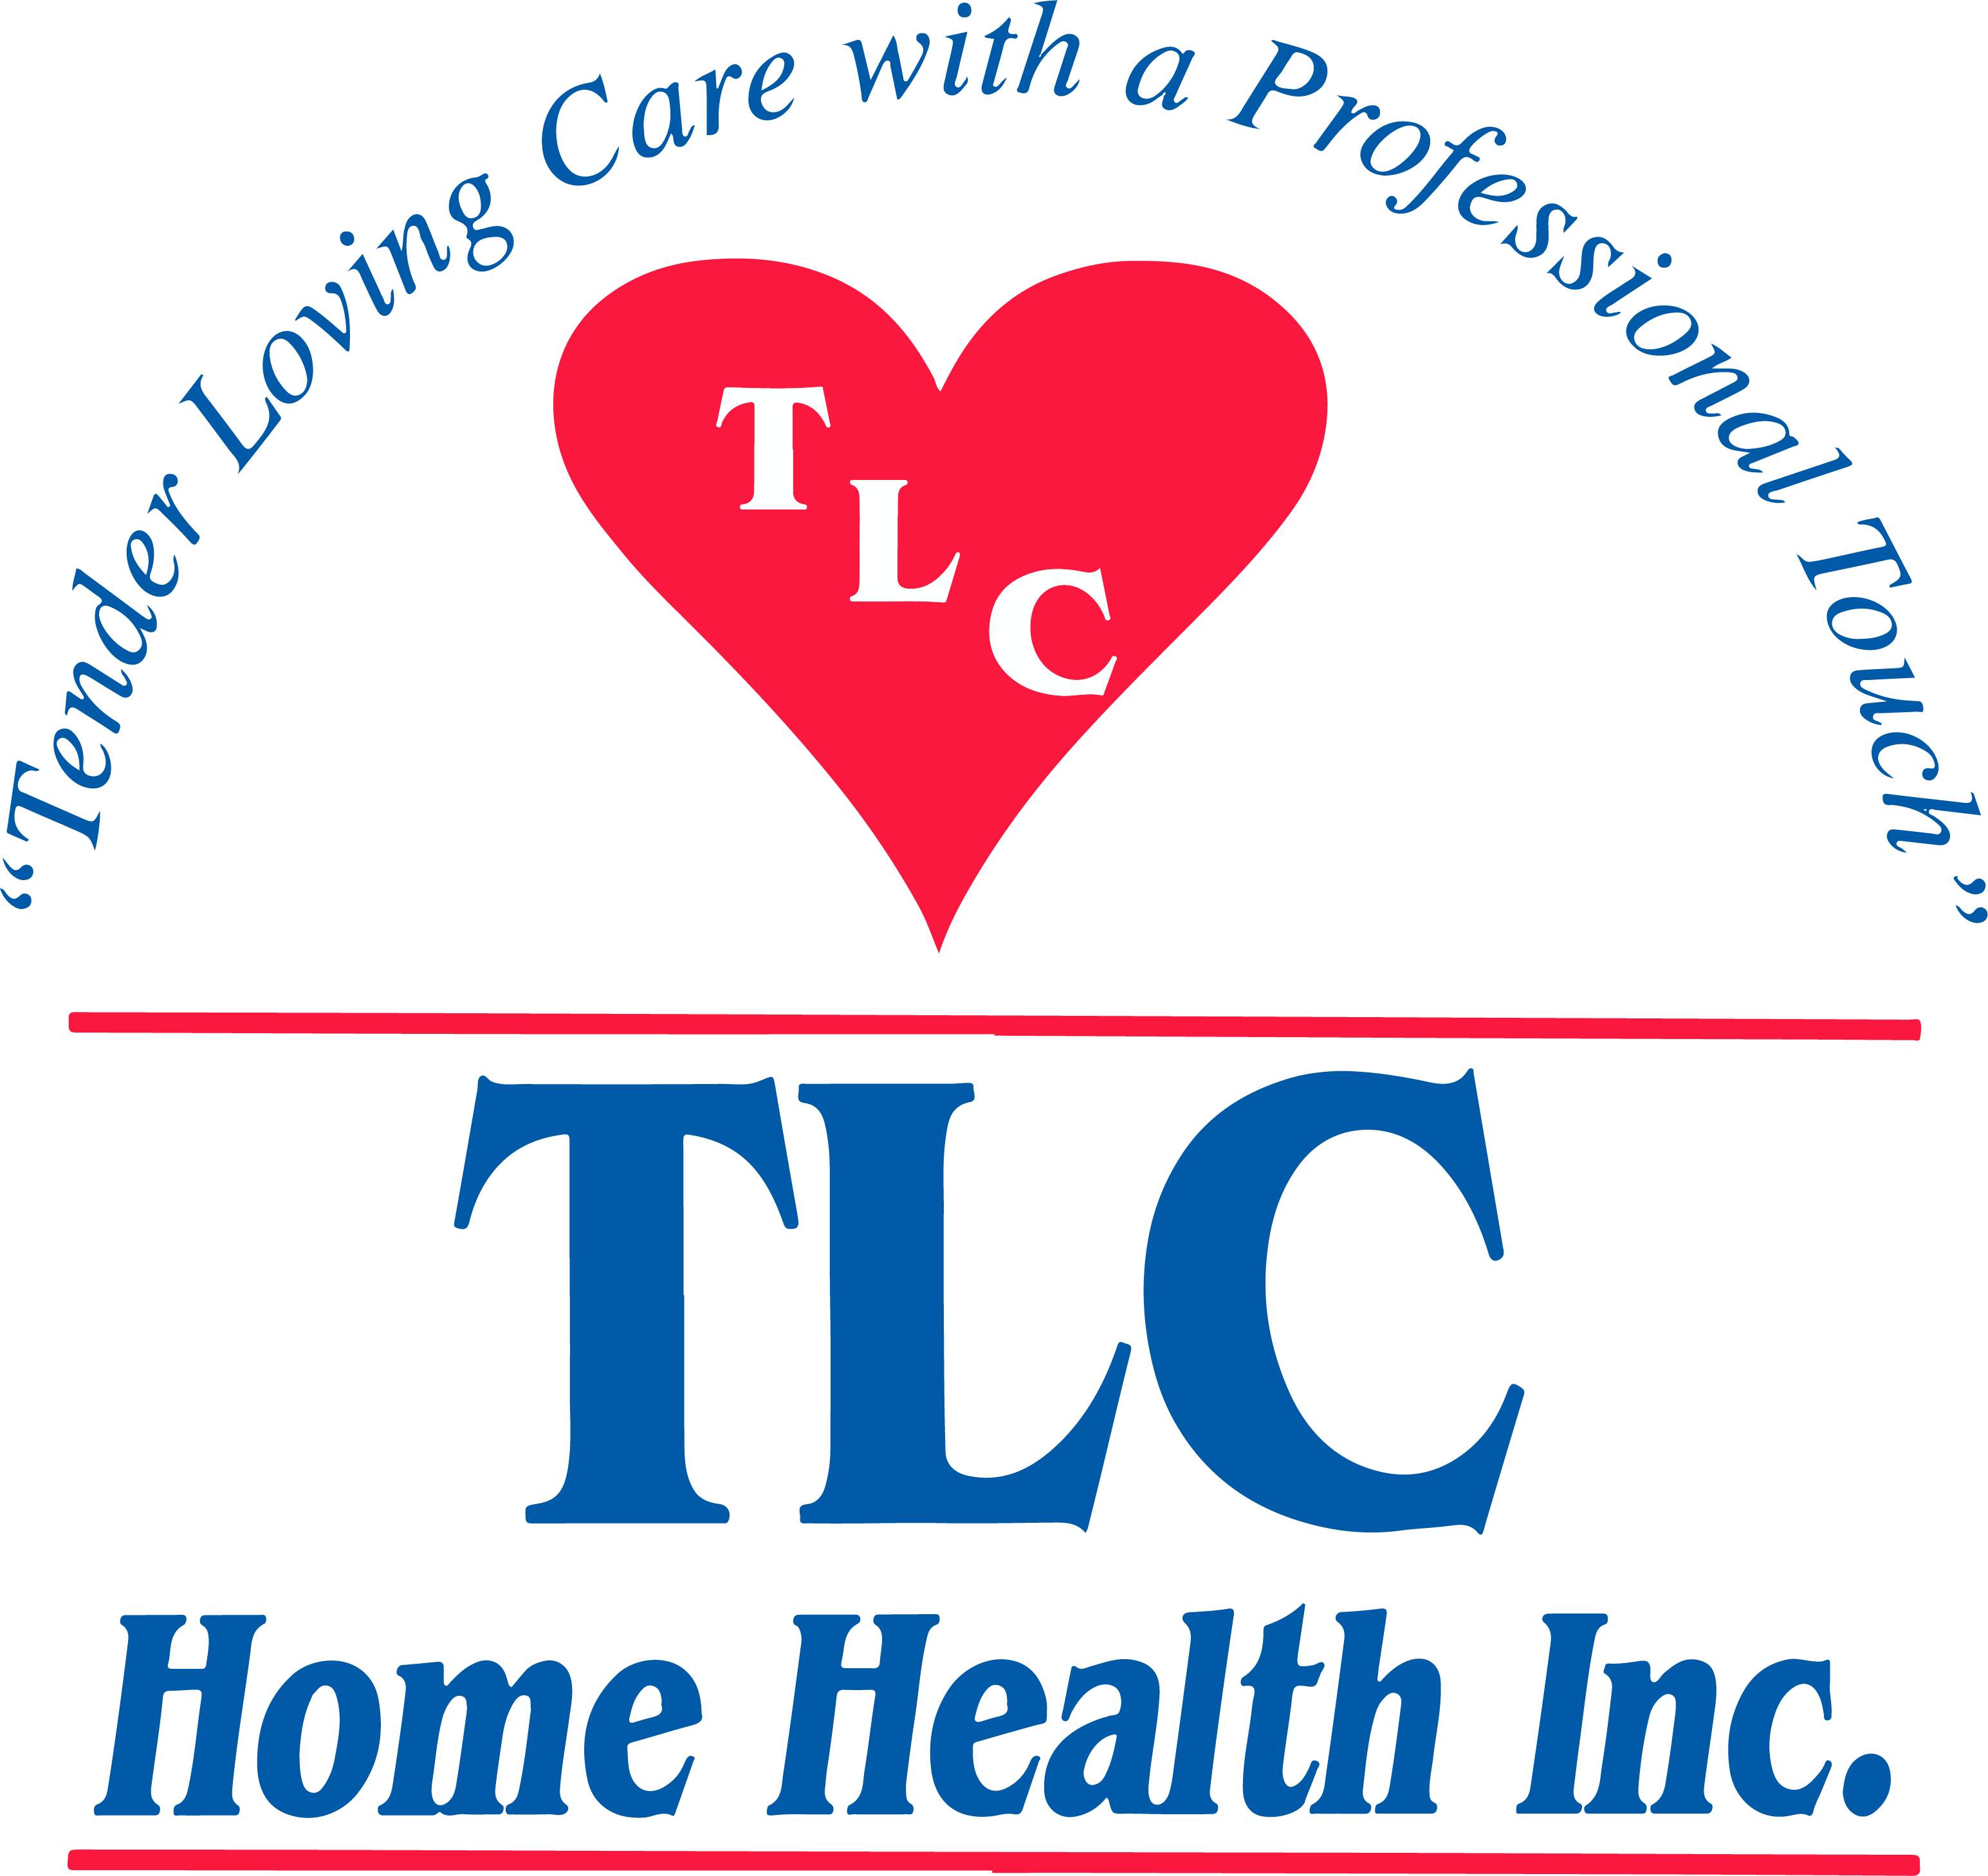 TLC Home Health, Inc.